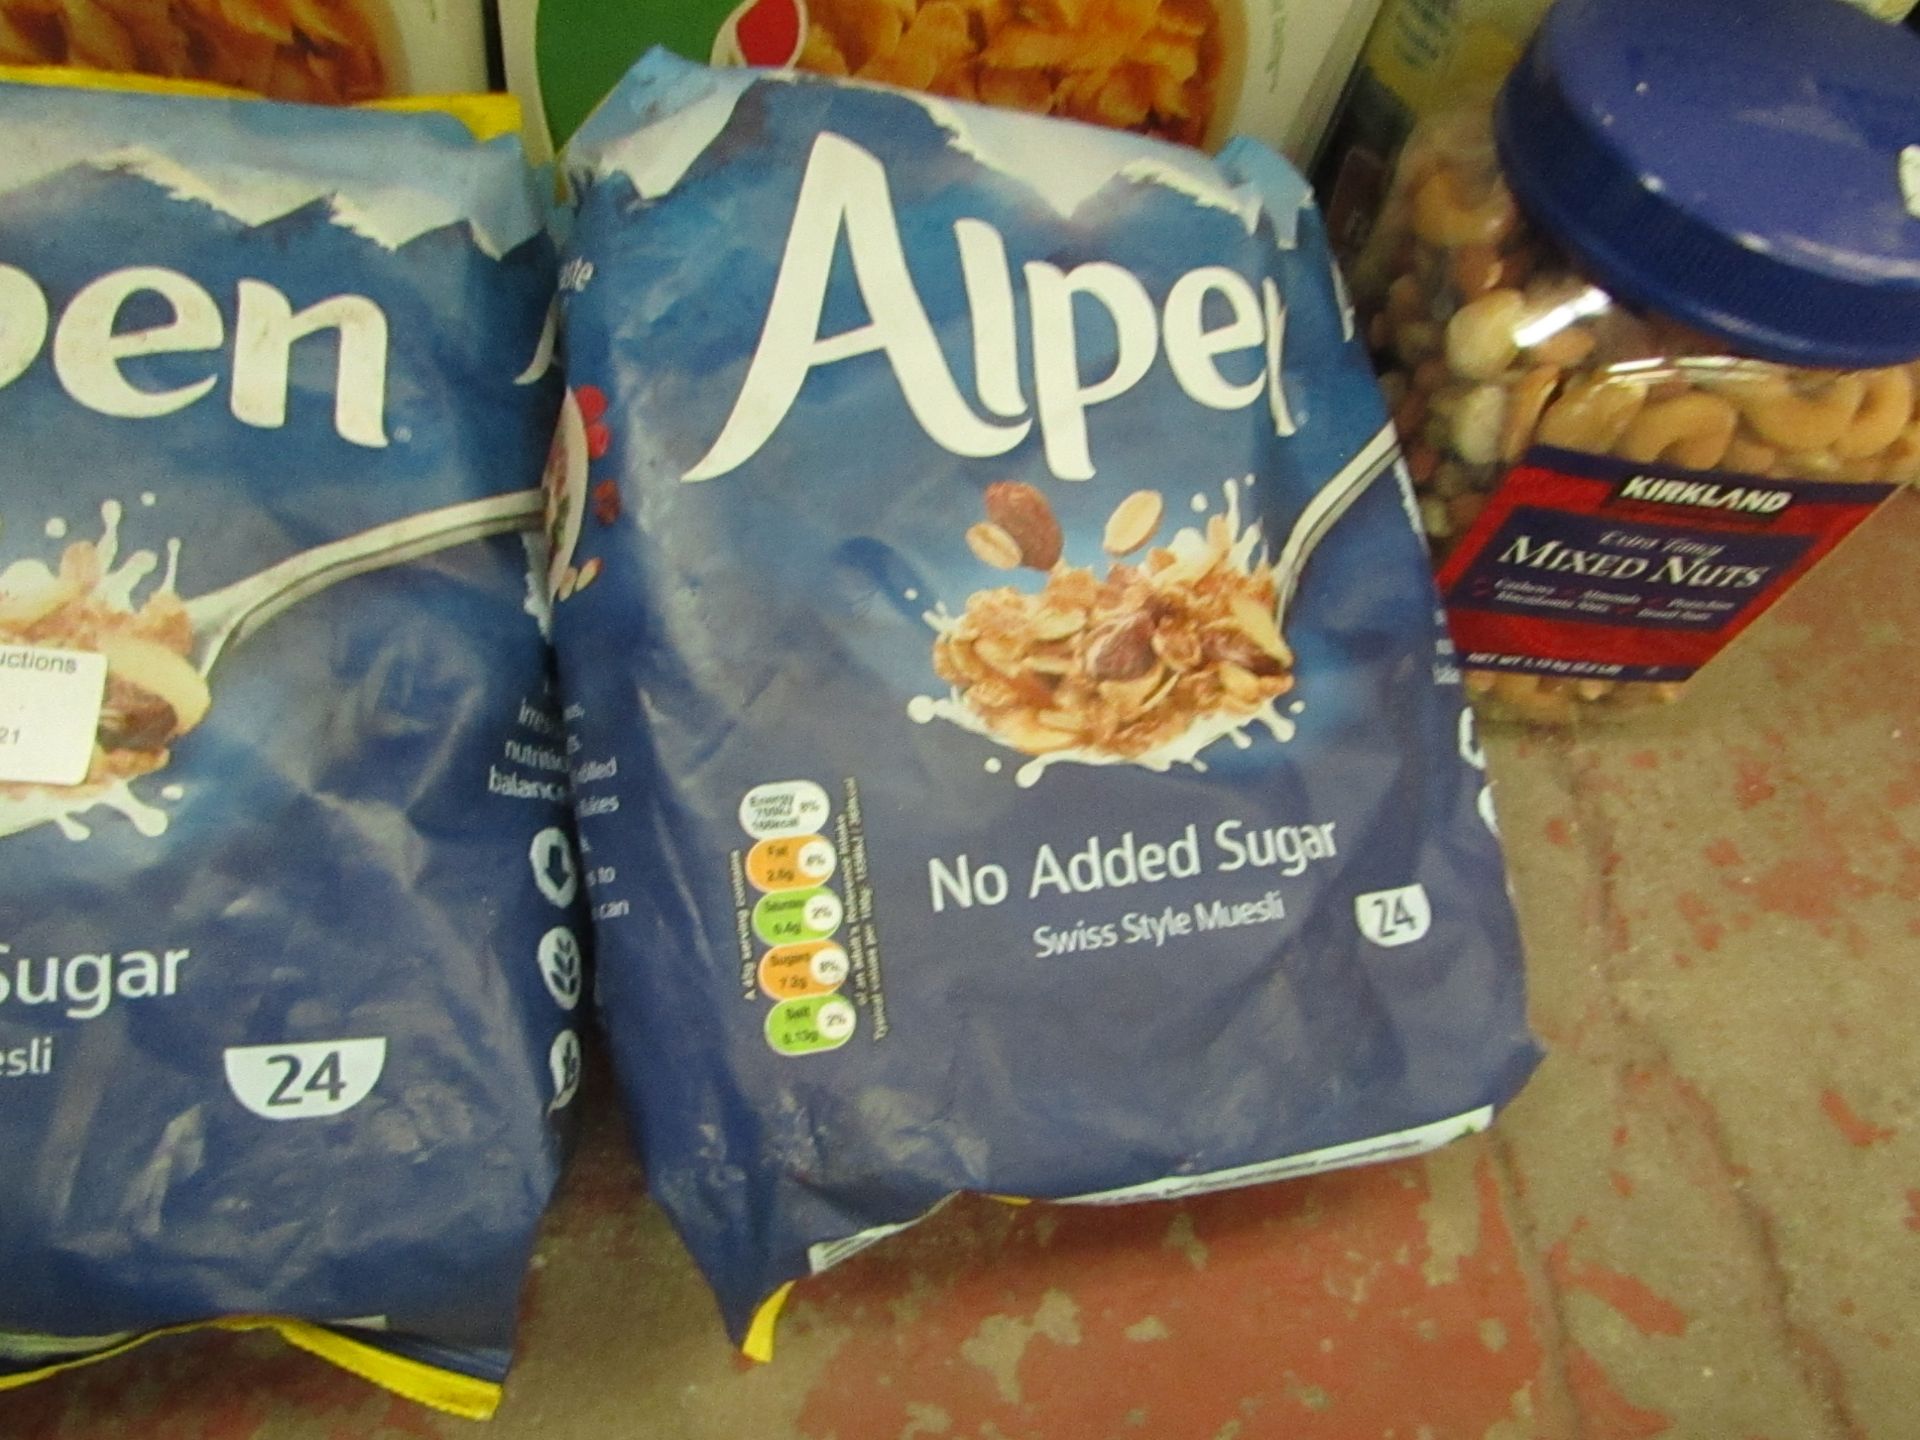 Alpen - No Added Sugar Swiss Style Muesli - 1.1kg - Best before 16/12/2021